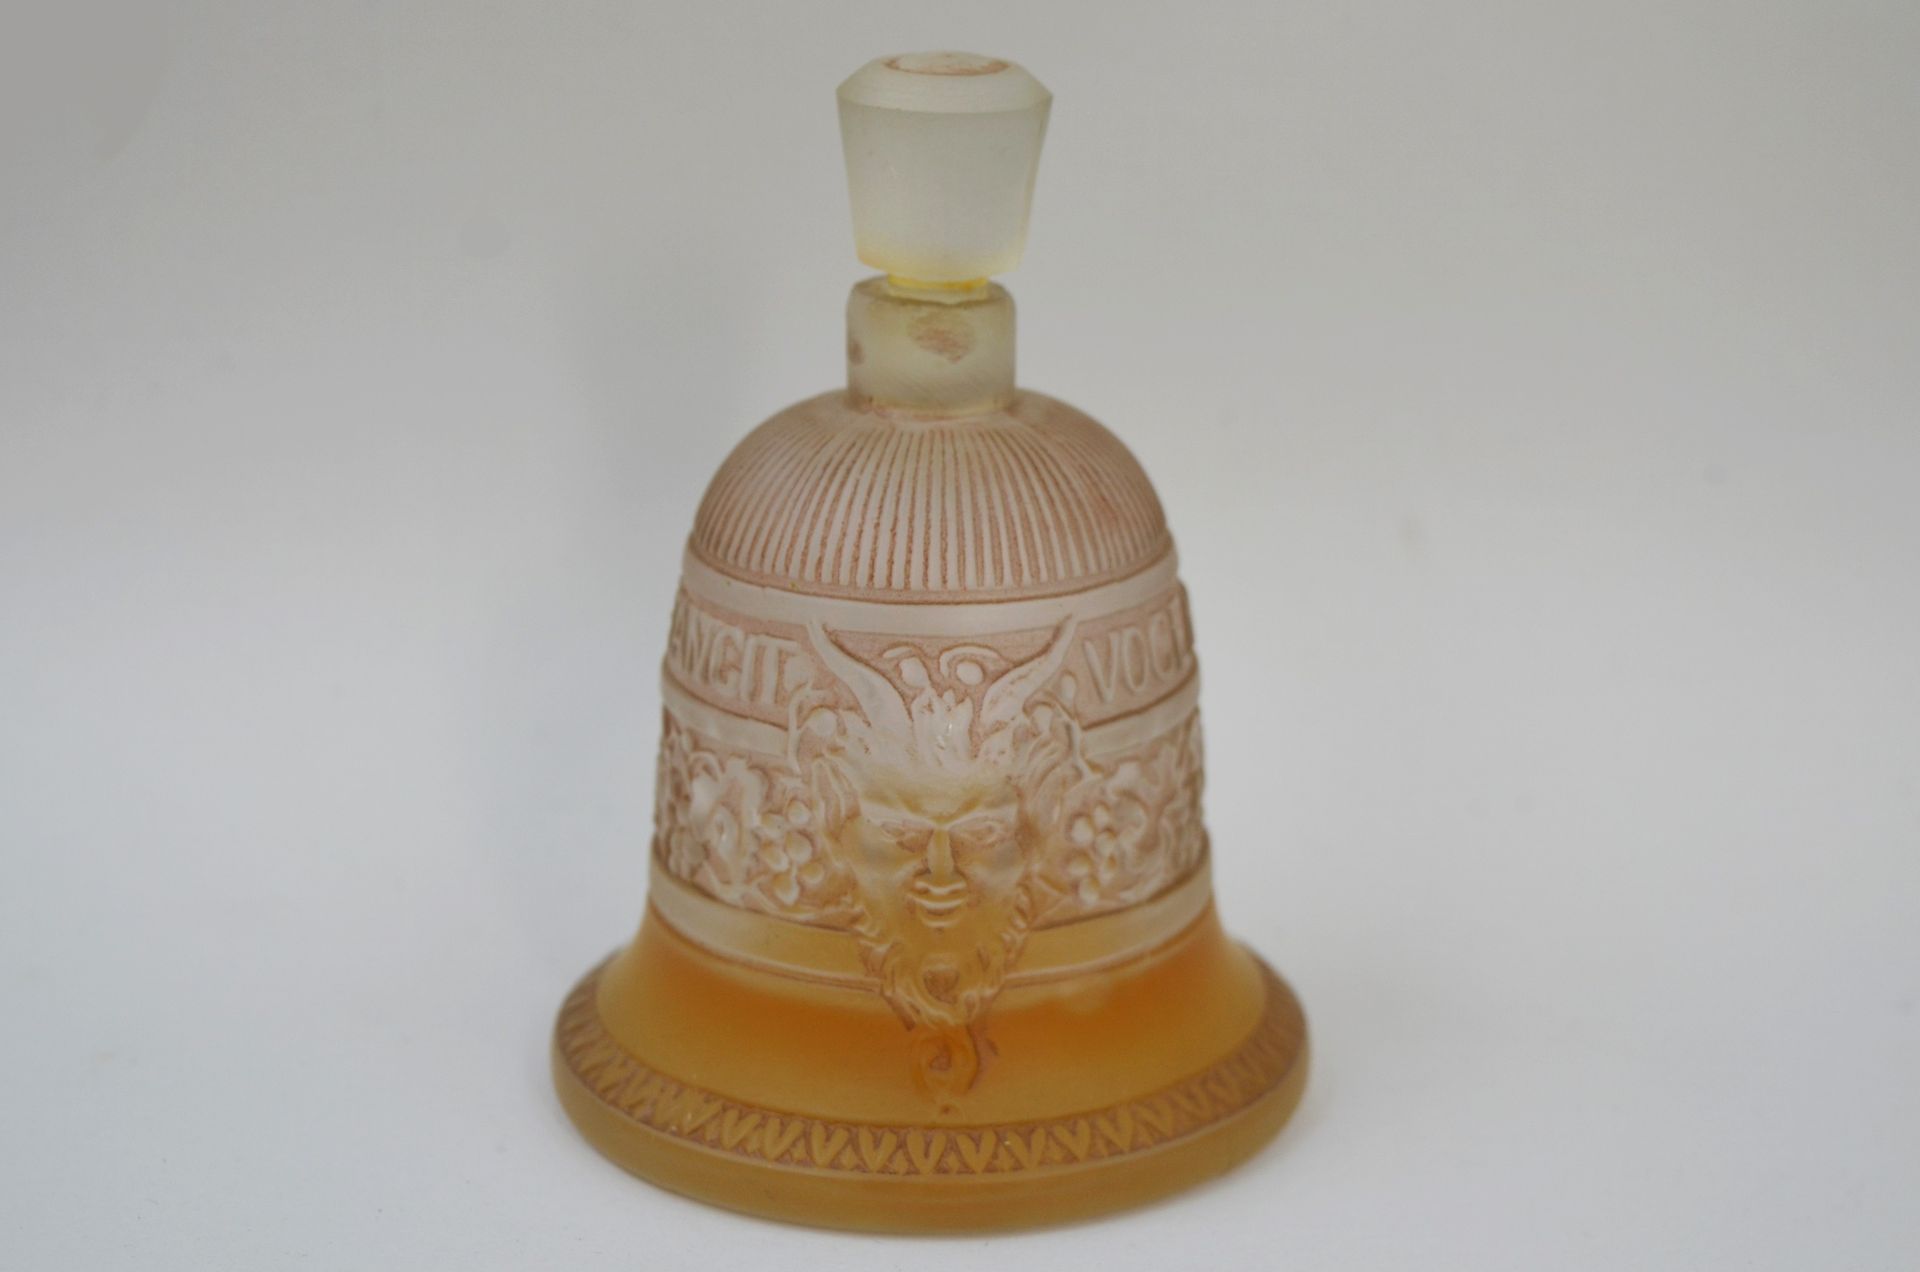 Null 芳香剂 "La cloche

极其罕见的压制缎面玻璃瓶，瓶身代表一个铃铛，有代表萨提尔的浮雕。拉丁文浮雕铭文 "Vocem-Meam-Audit-Q&hellip;